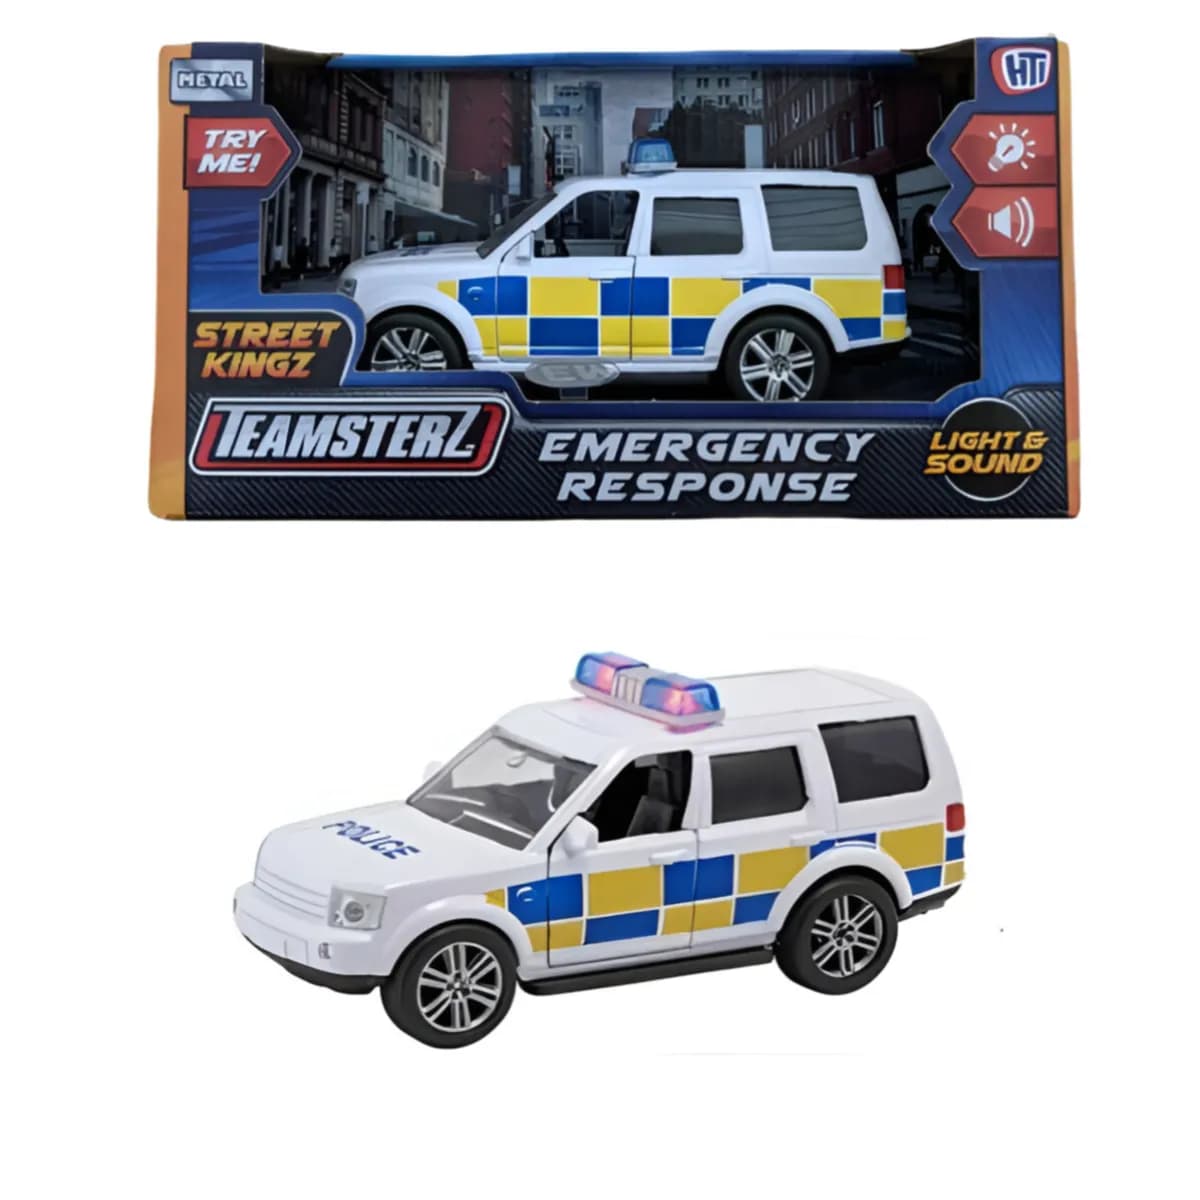 Teamsterz  Light & Sound Emergency Response Police Vehicle For Kids  - (LMLT43)